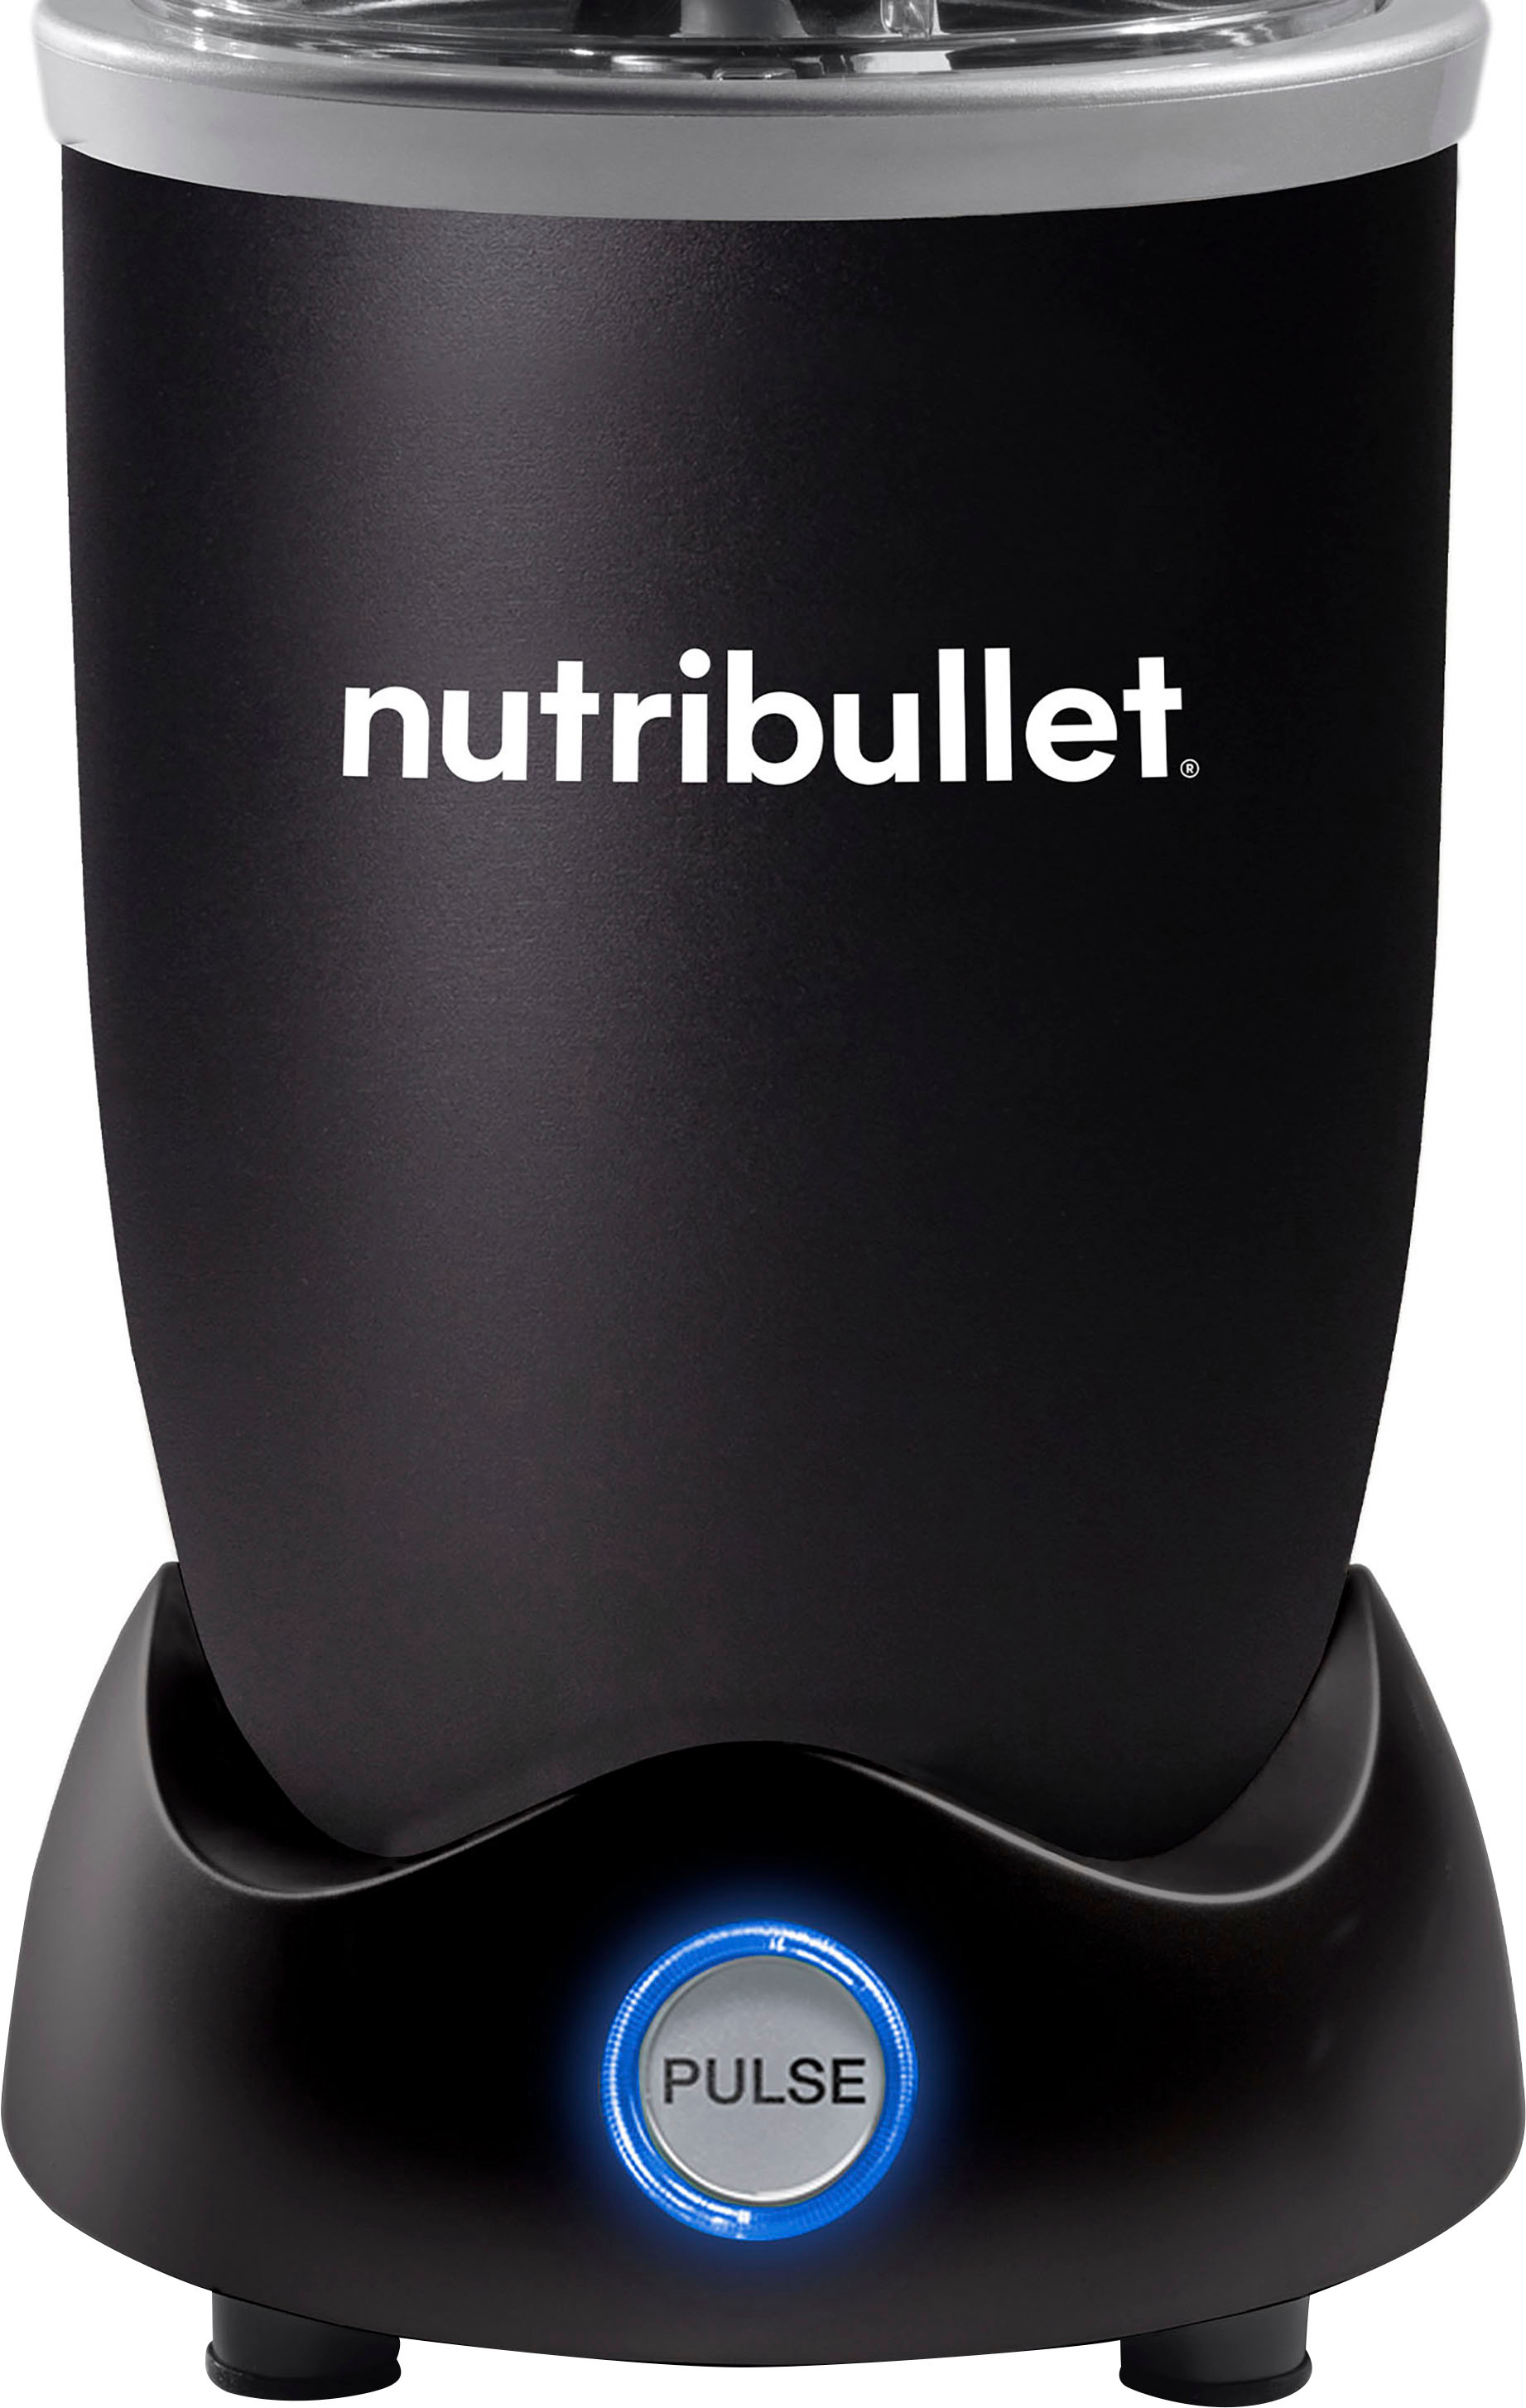 nutribullet Pro Plus Blender with 1200W - N12-1001 Pro Plus